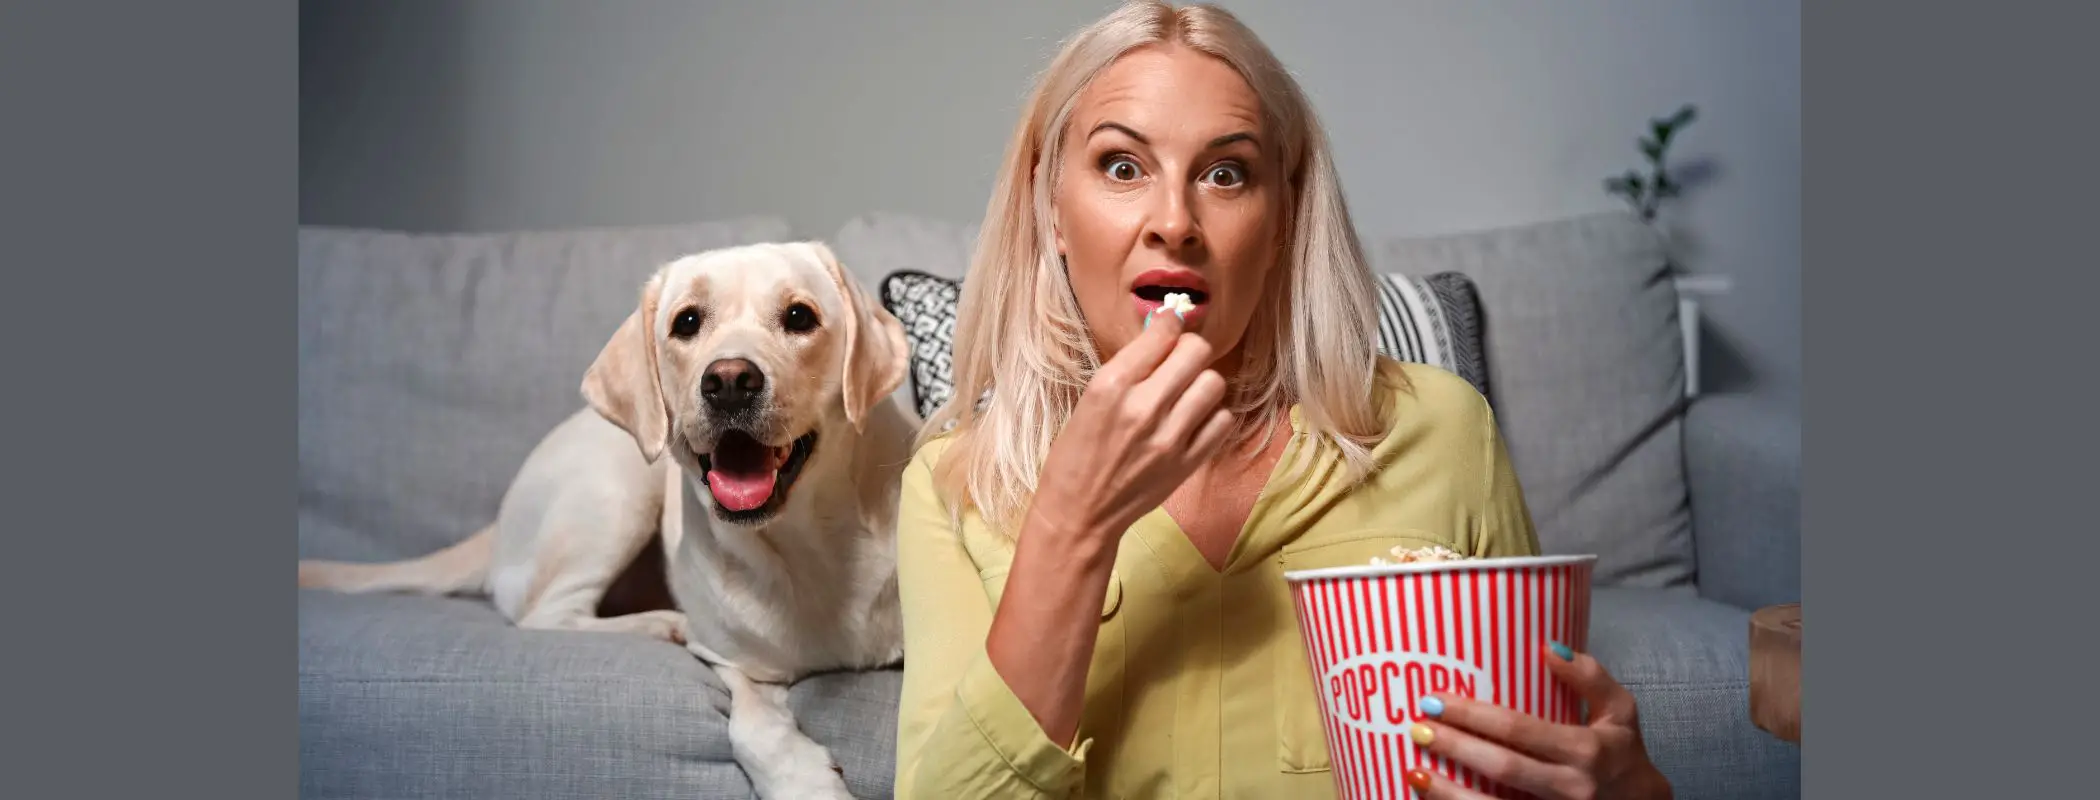 Can Popcorn Kill Dogs?